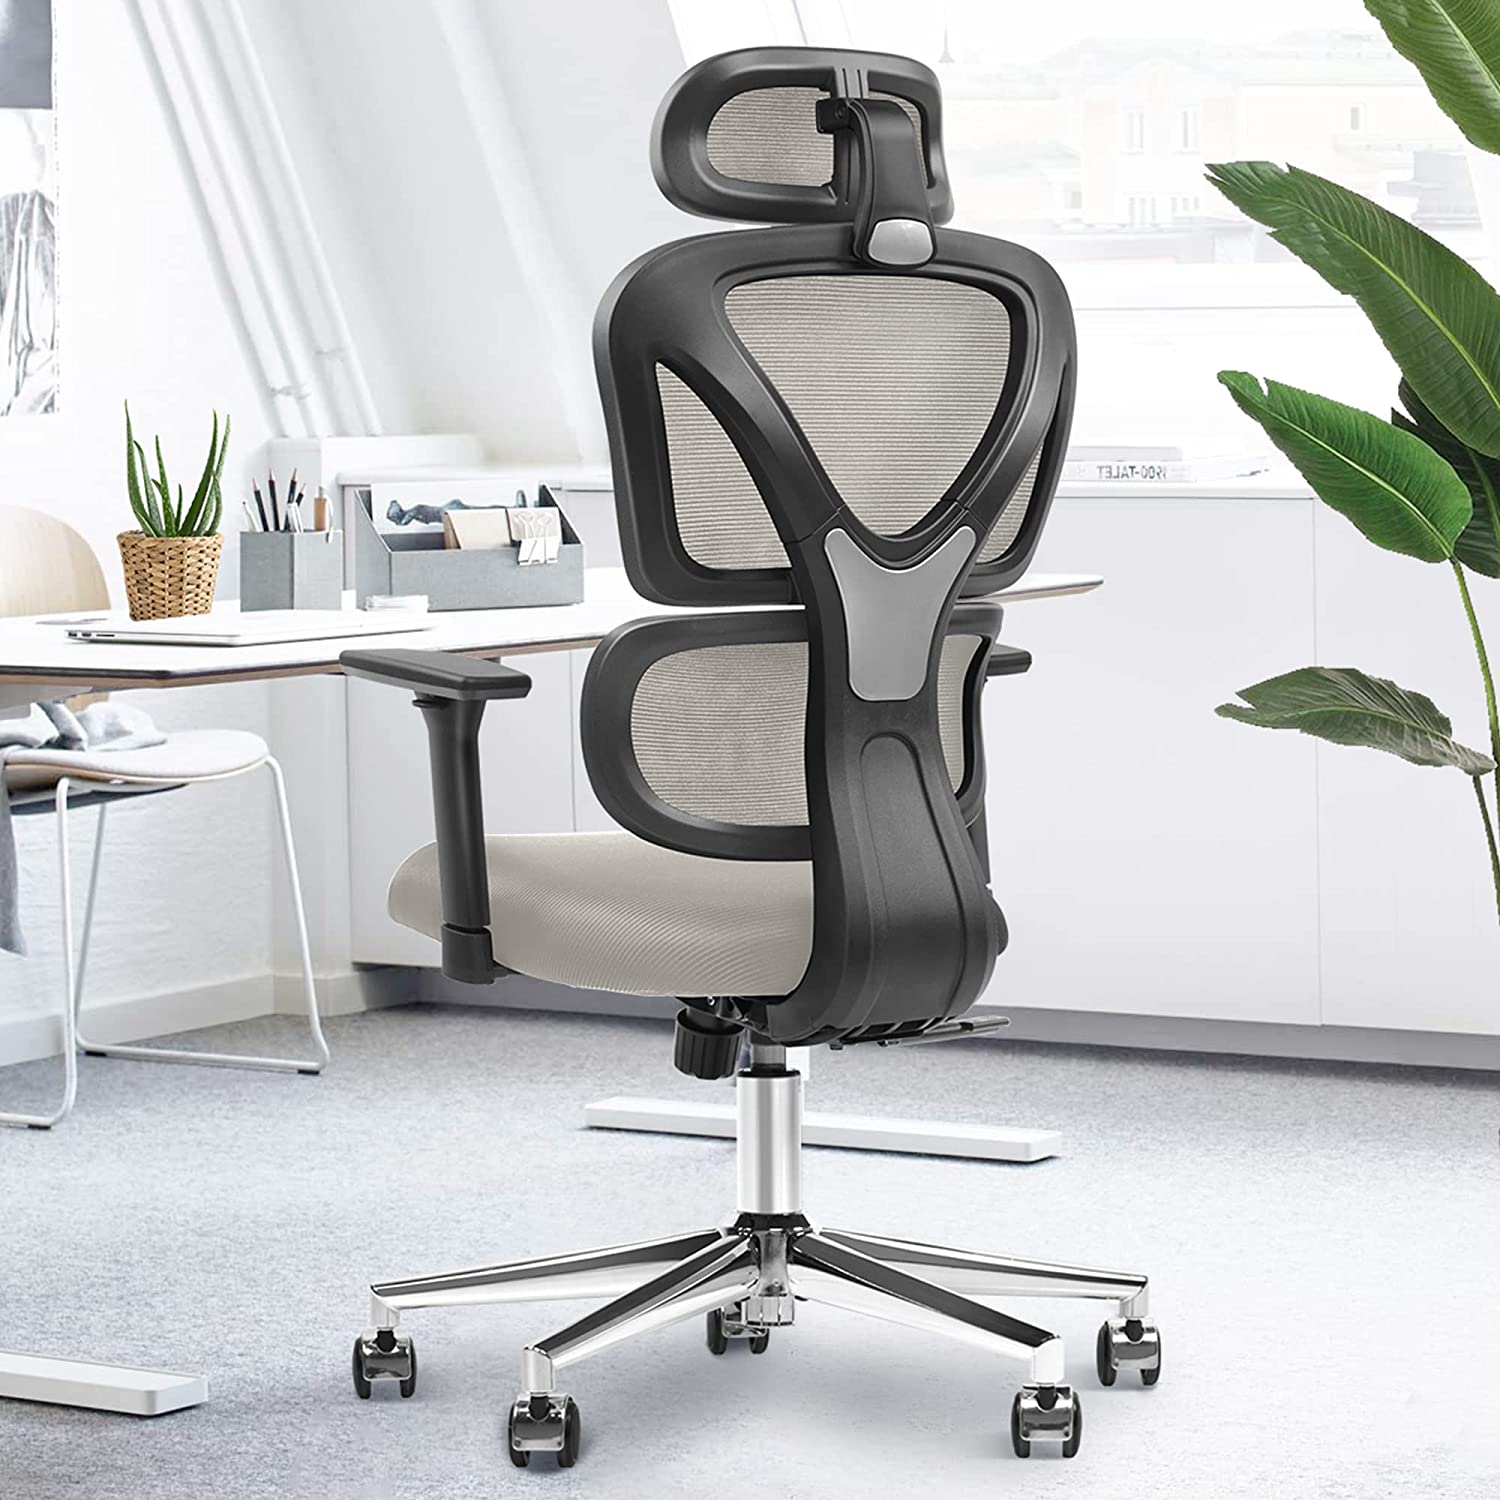 3D 팔걸이 및 요추 지지대가 포함된 홈 오피스 롤링 회전 의자 메쉬 하이백 책상 의자